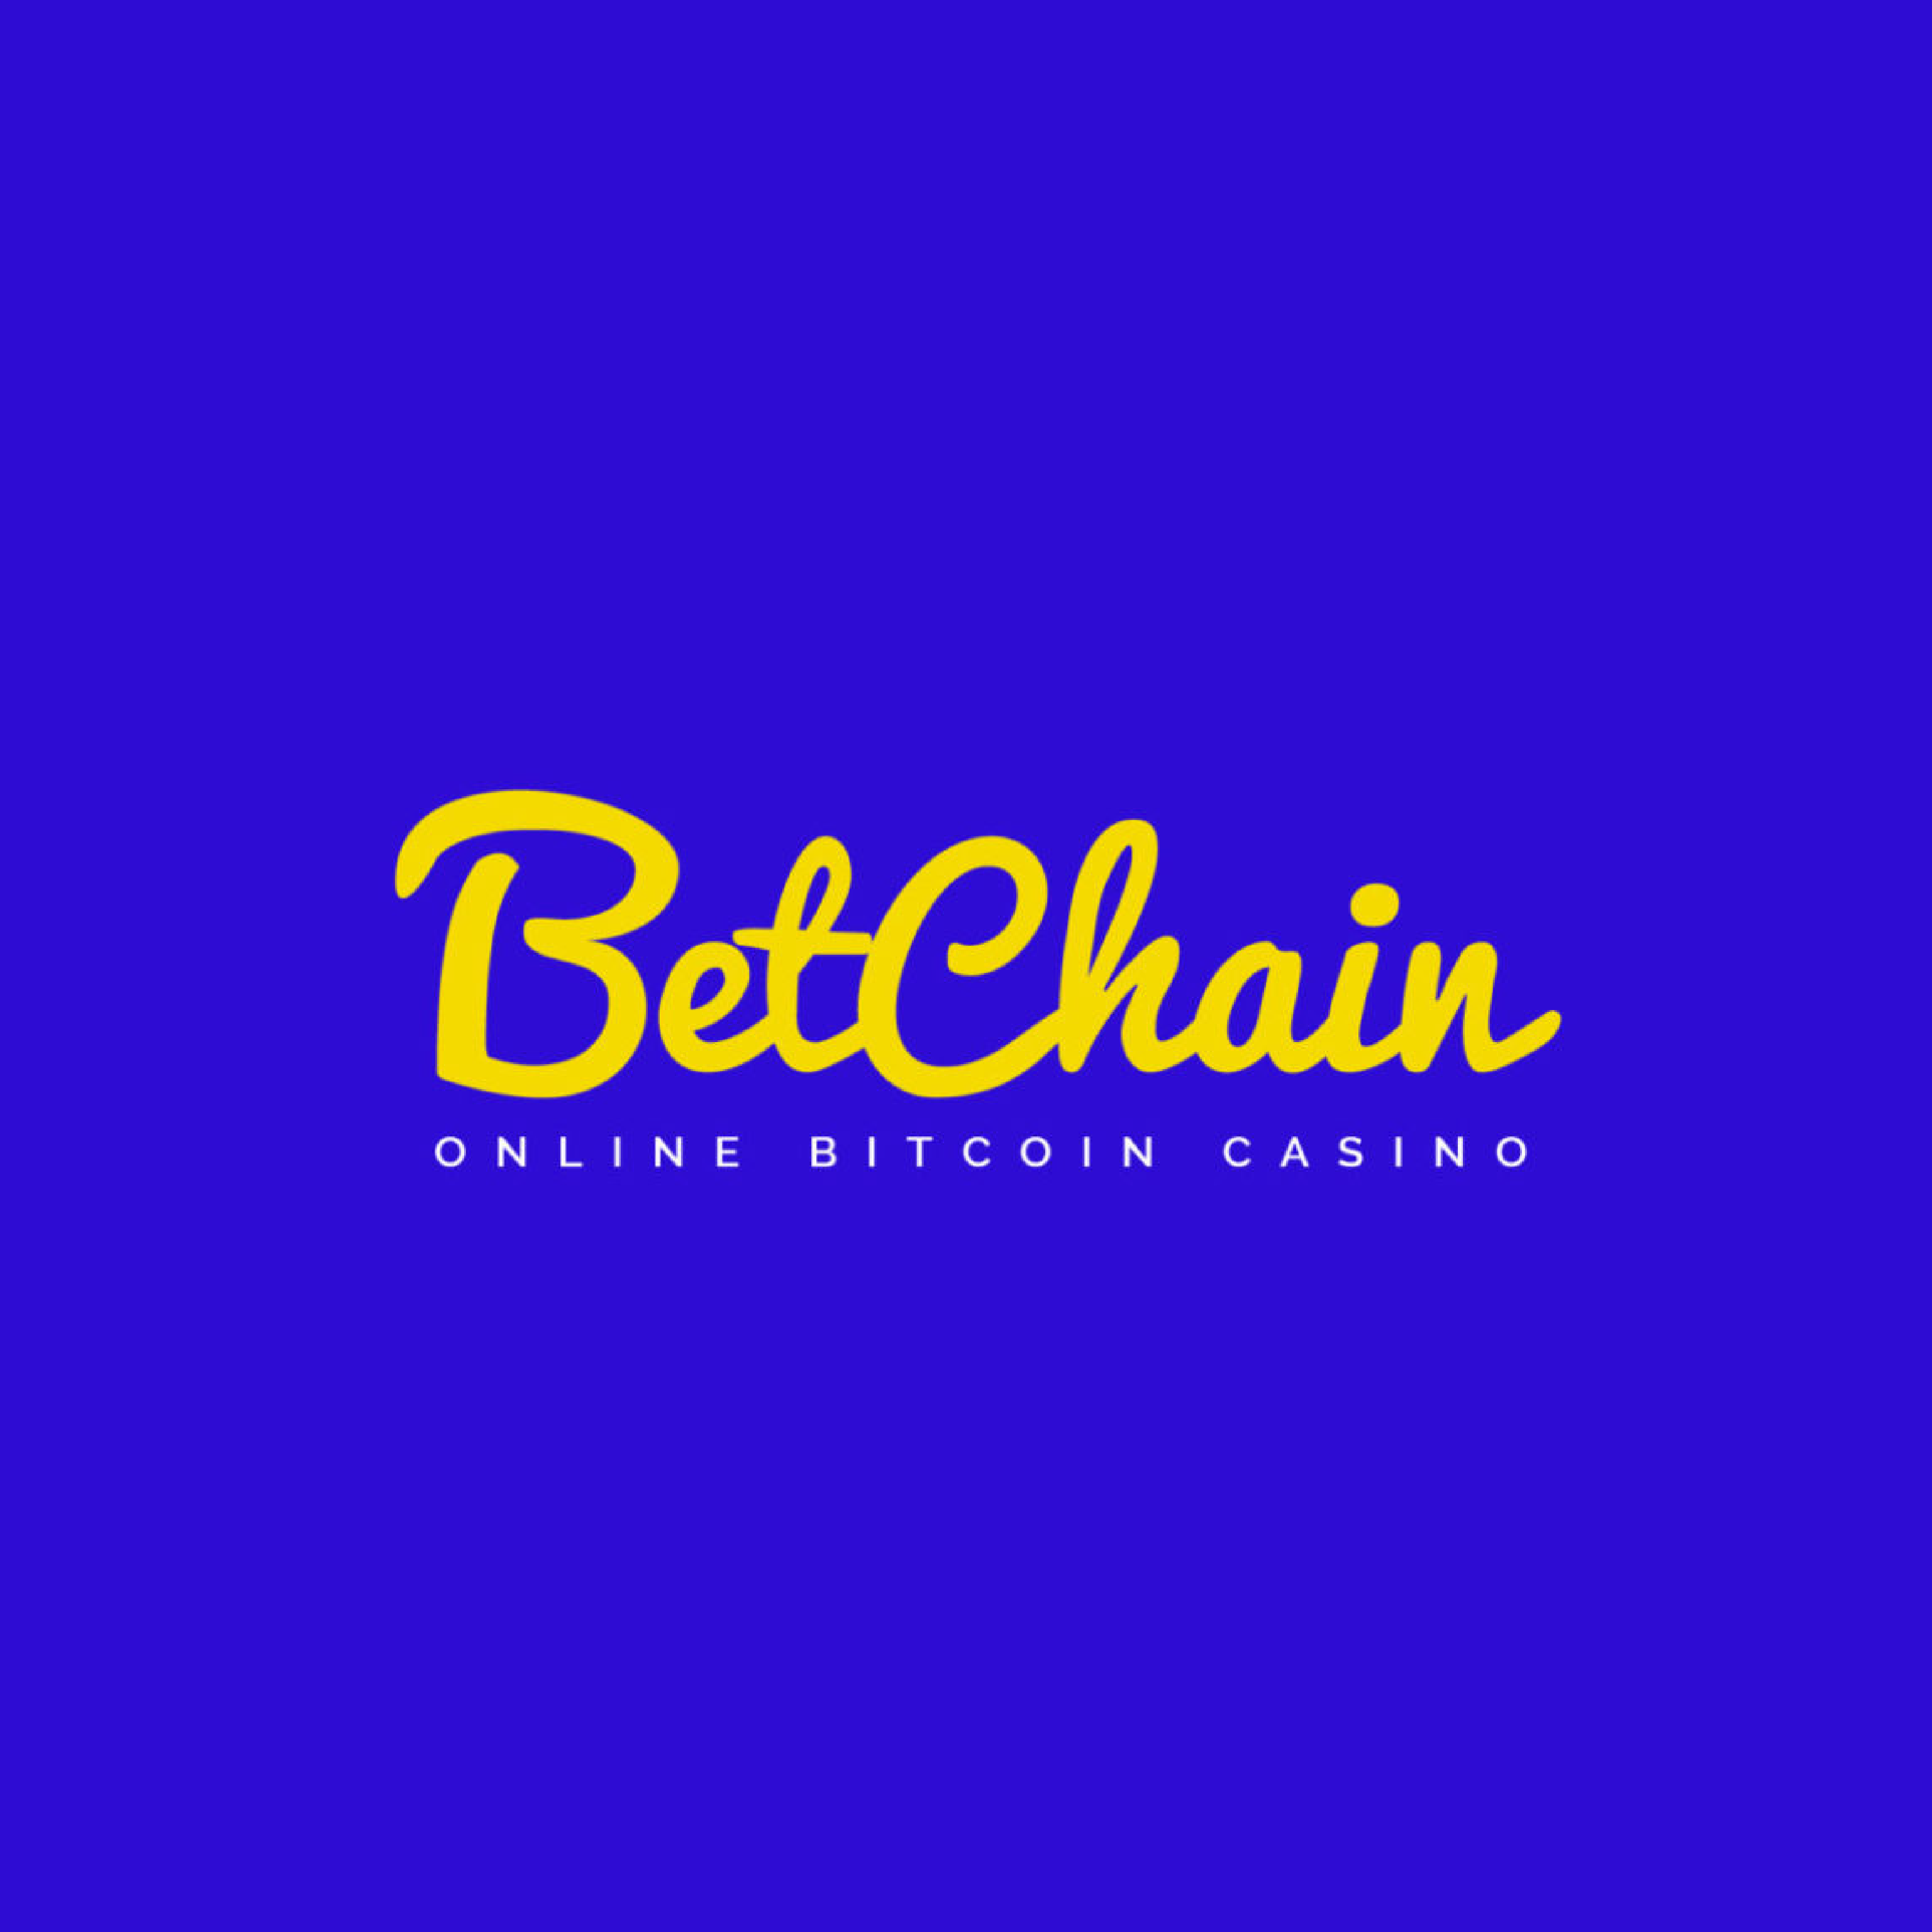 Online bitcoin casinos for cash